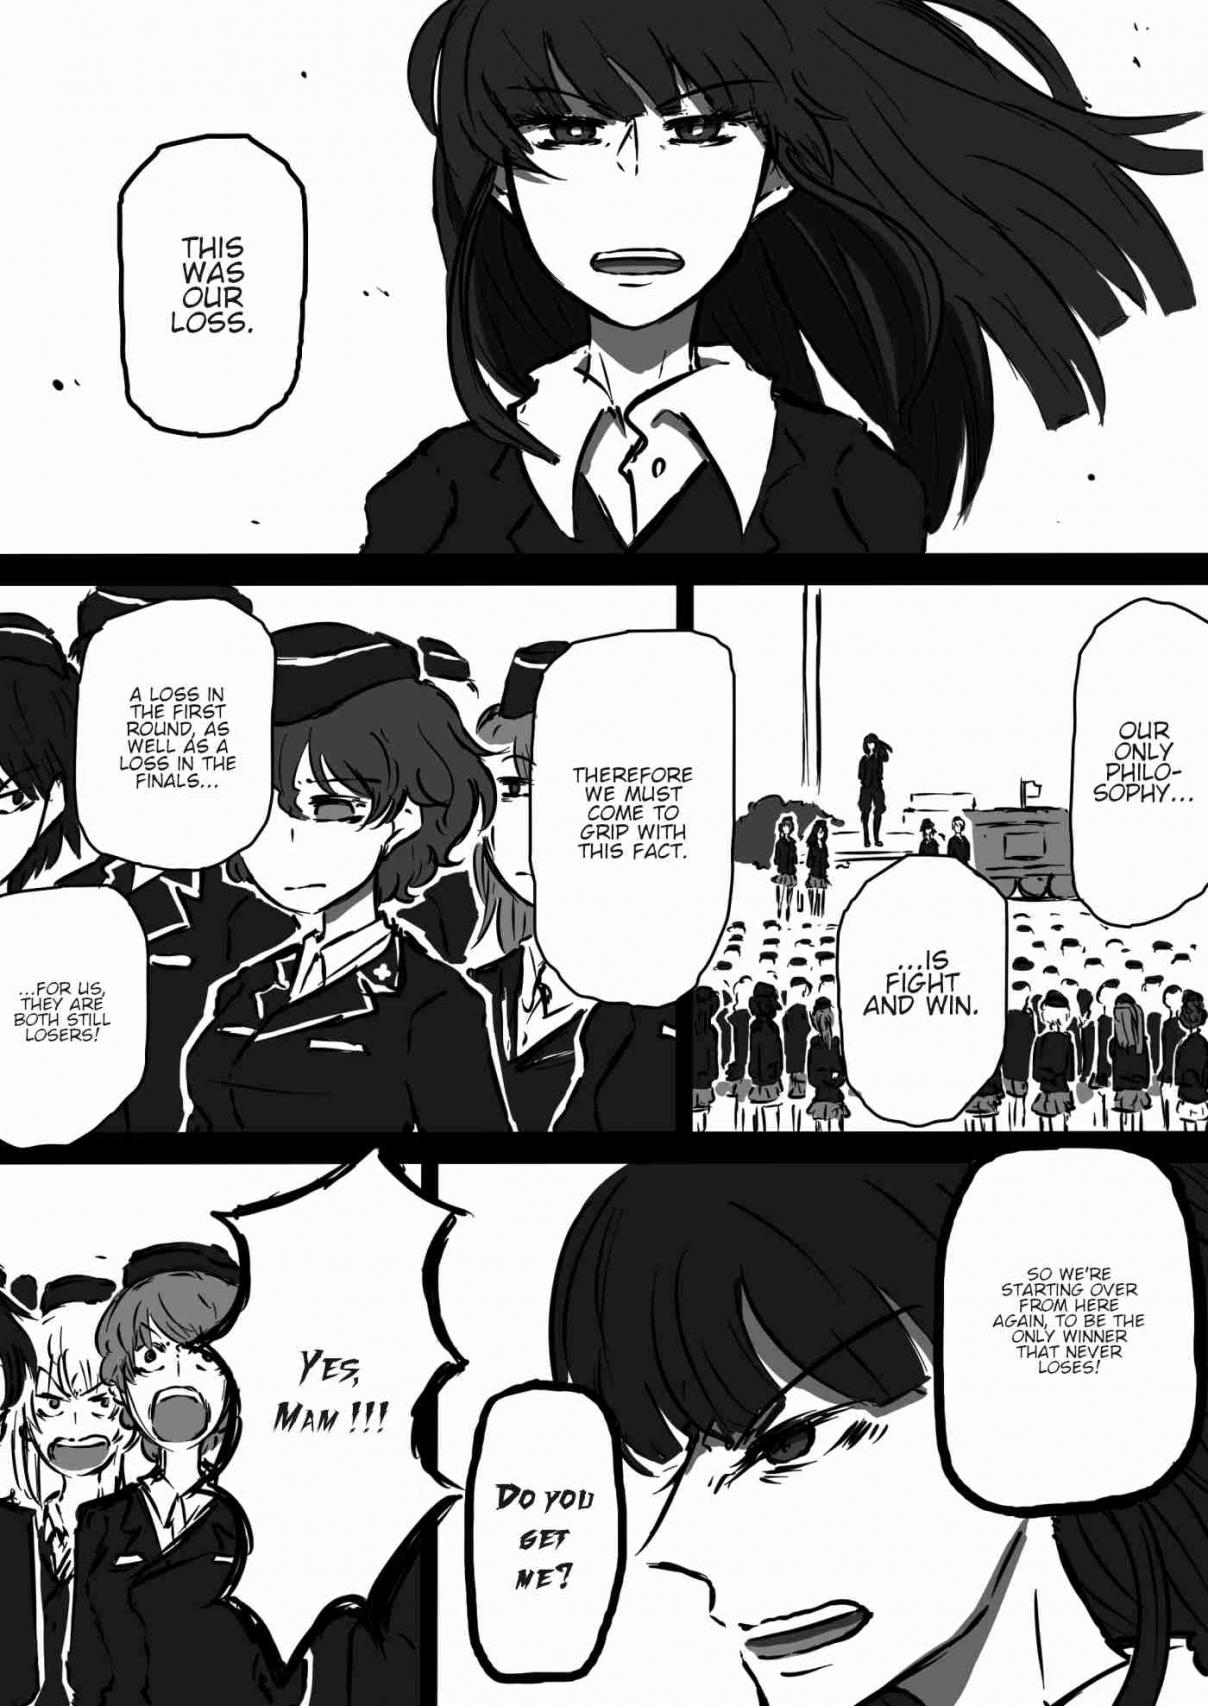 Girls und Panzer Unofficial Story Koume's Road Vol. 1 Ch. 2